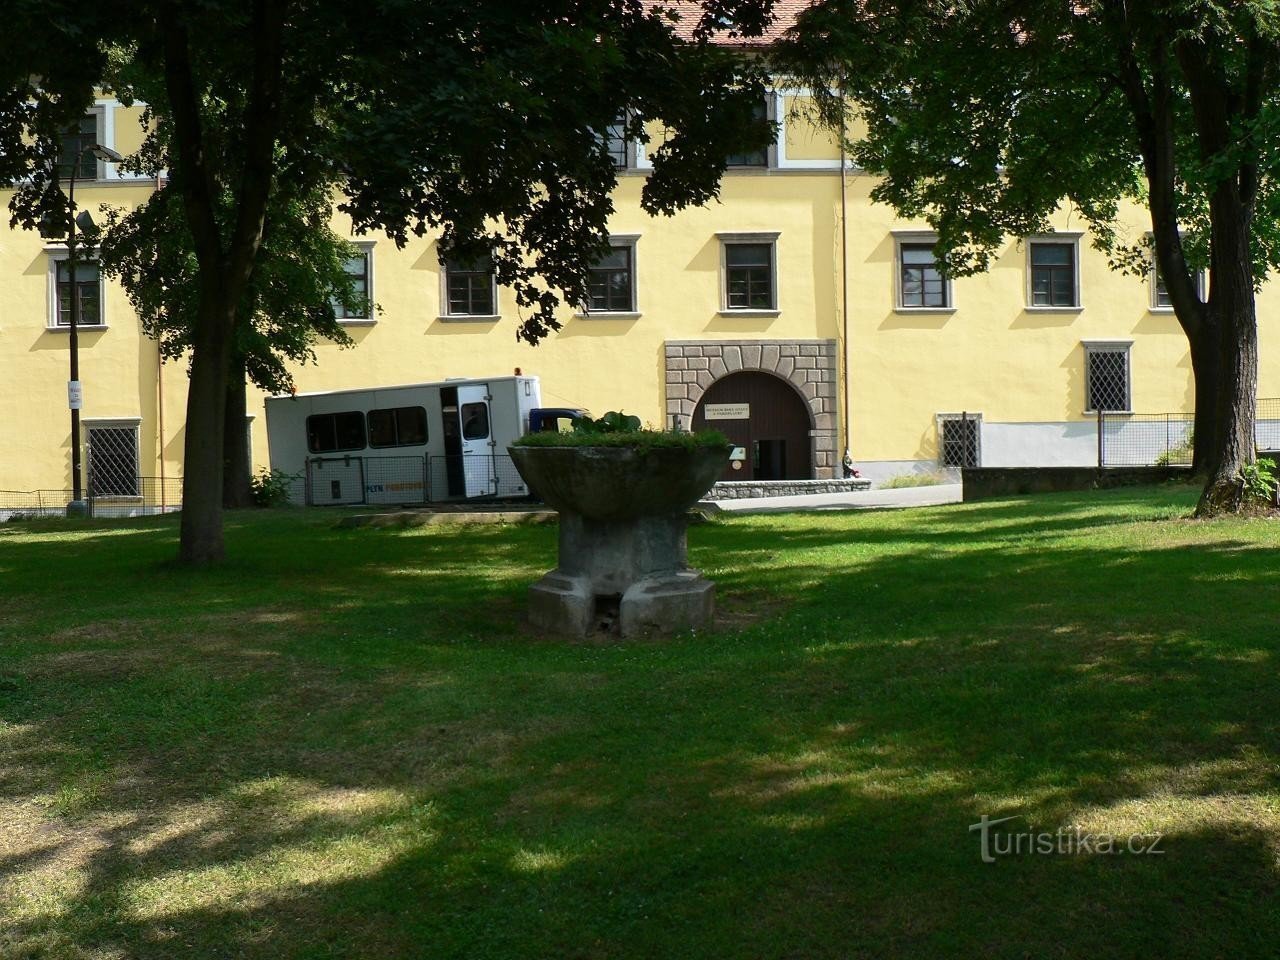 Střelské Hoštice, parque frente al castillo